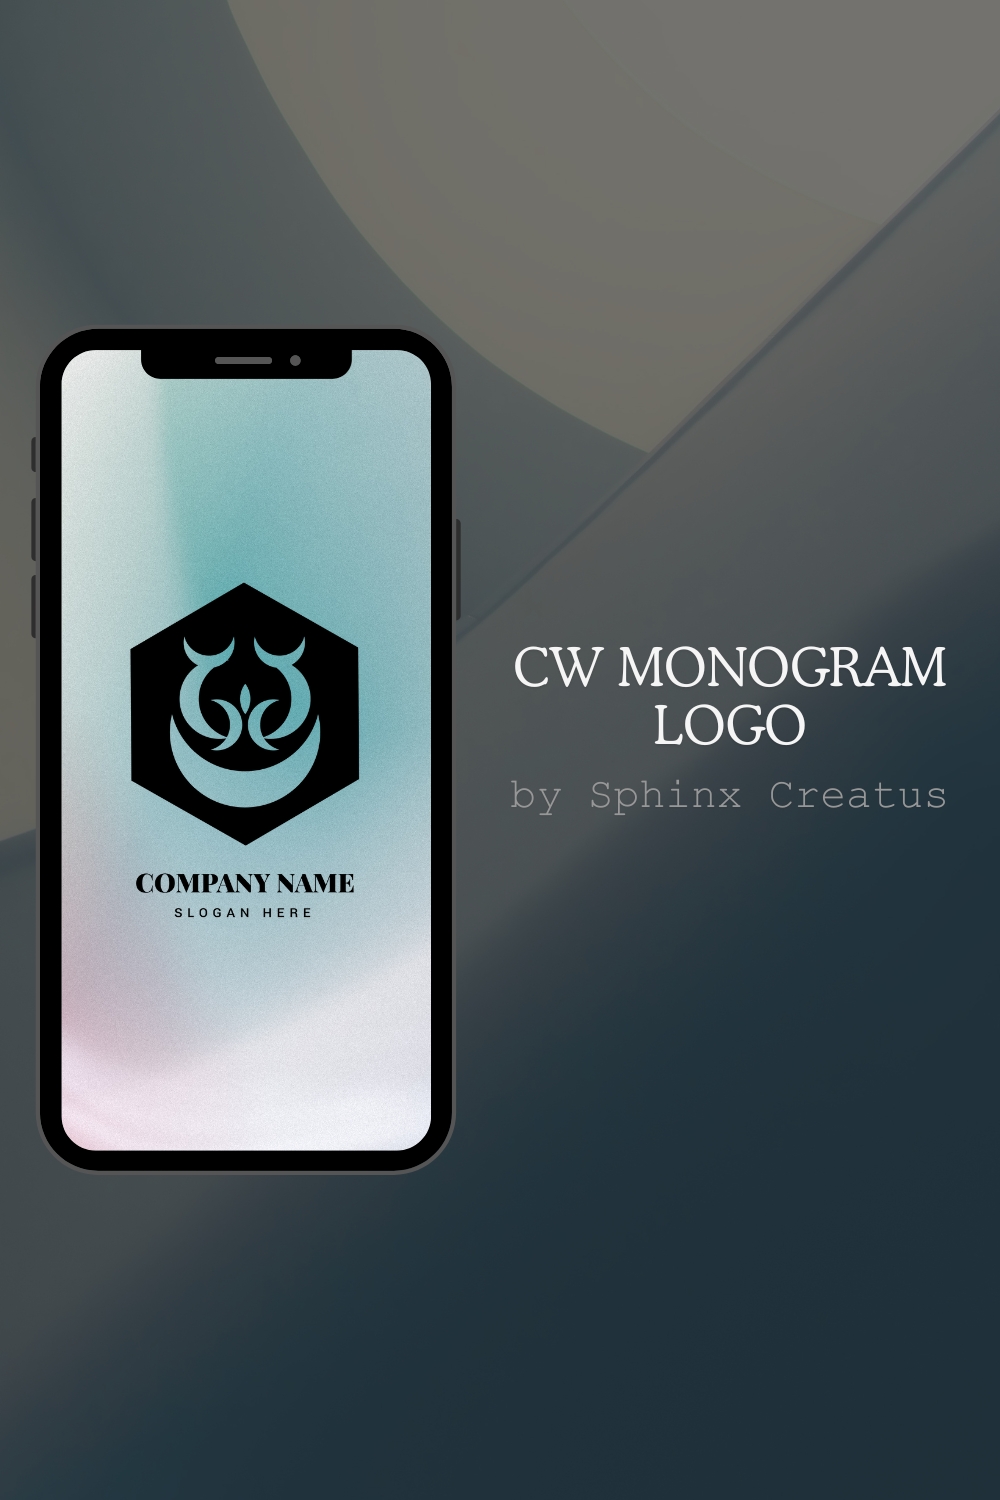 CW Monogram Logo [Sphinx Creatus] pinterest preview image.